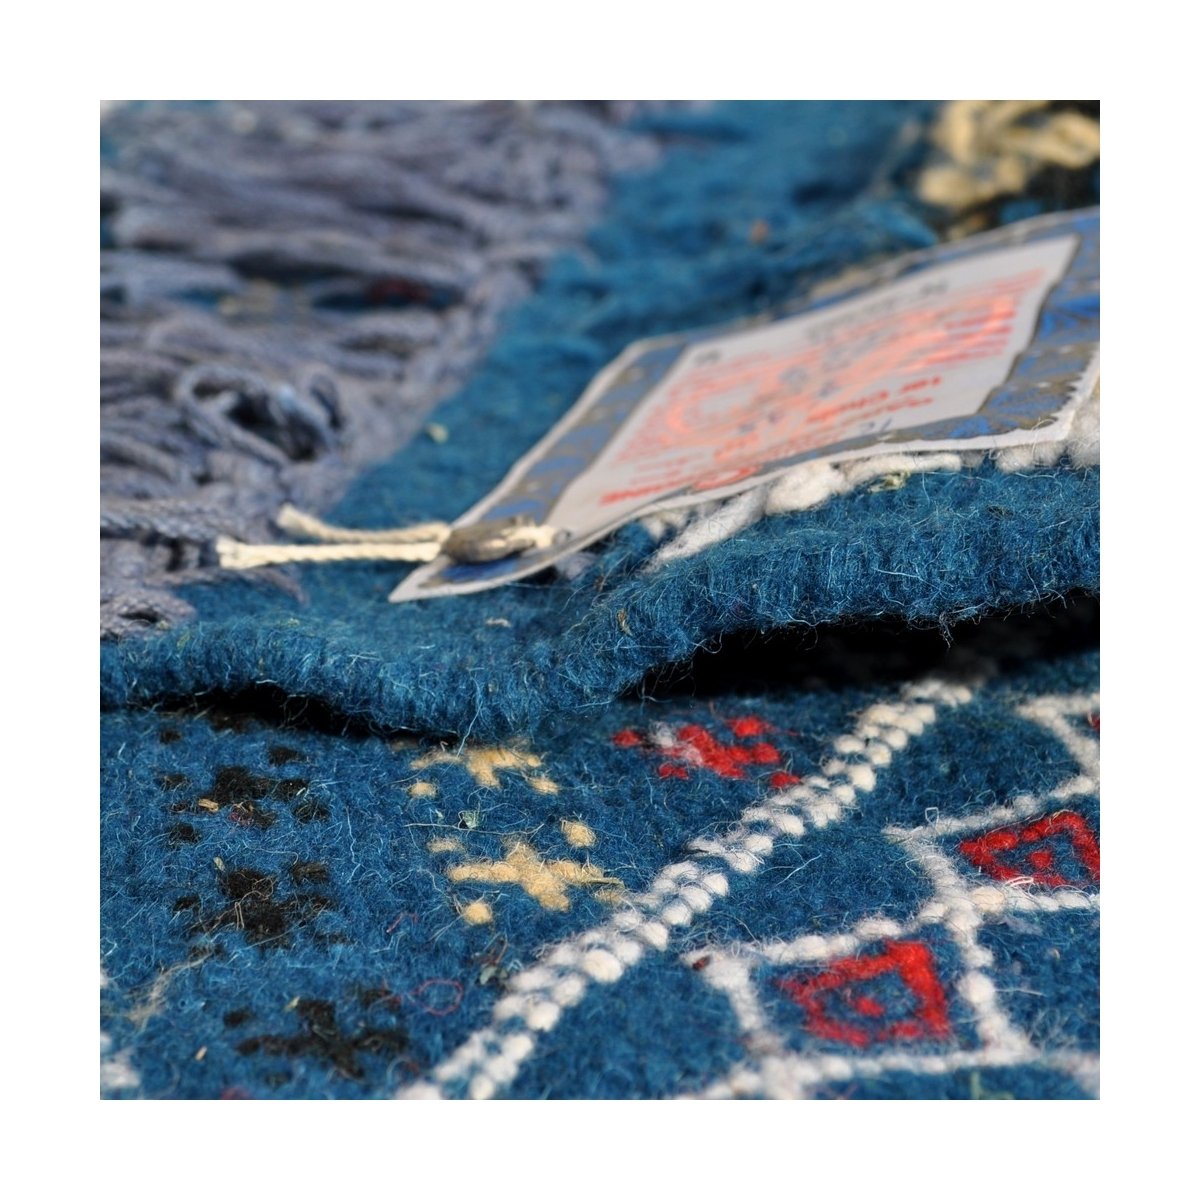 Berber carpet Large Rug Margoum Rehan 200x300 Blue (Handmade, Wool, Tunisia) Tunisian margoum rug from the city of Kairouan. Rec